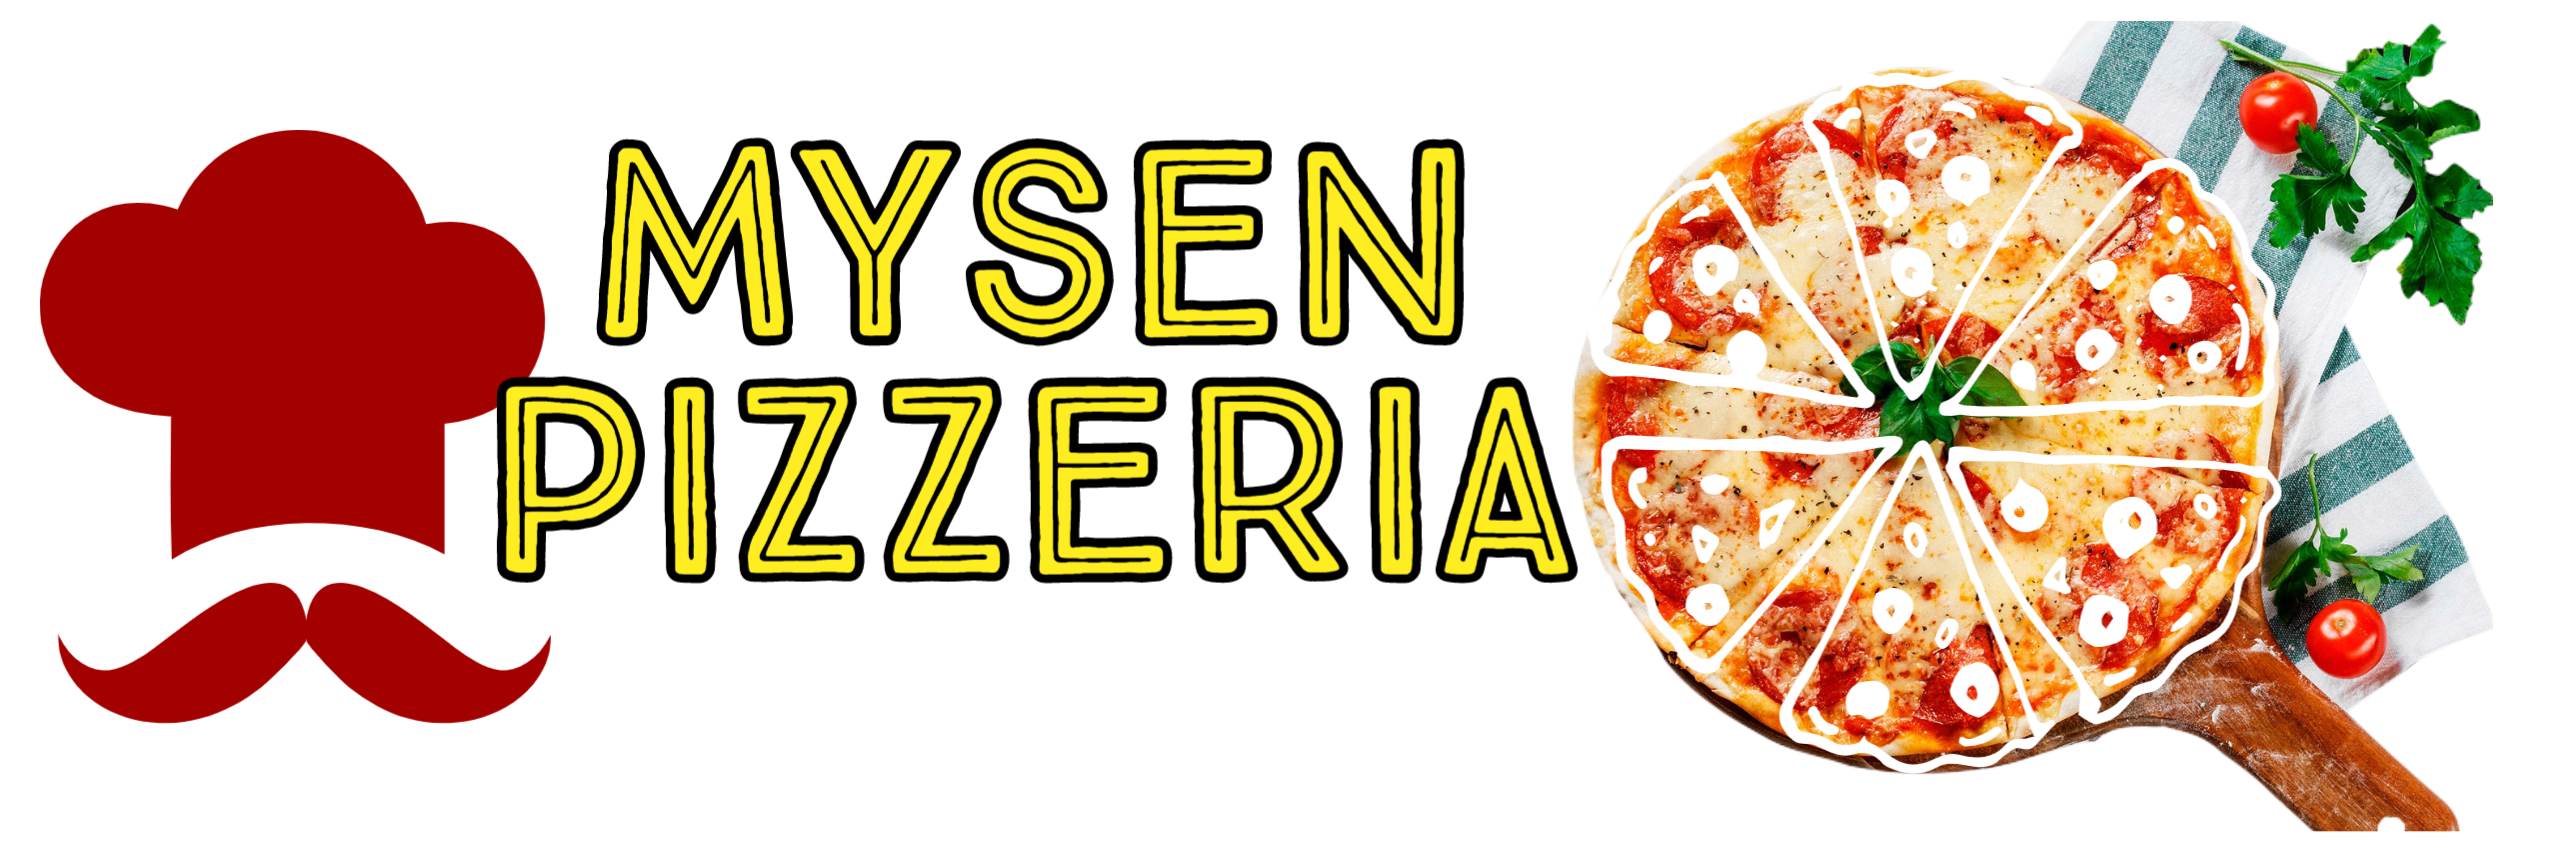 Mysen Pizzeria